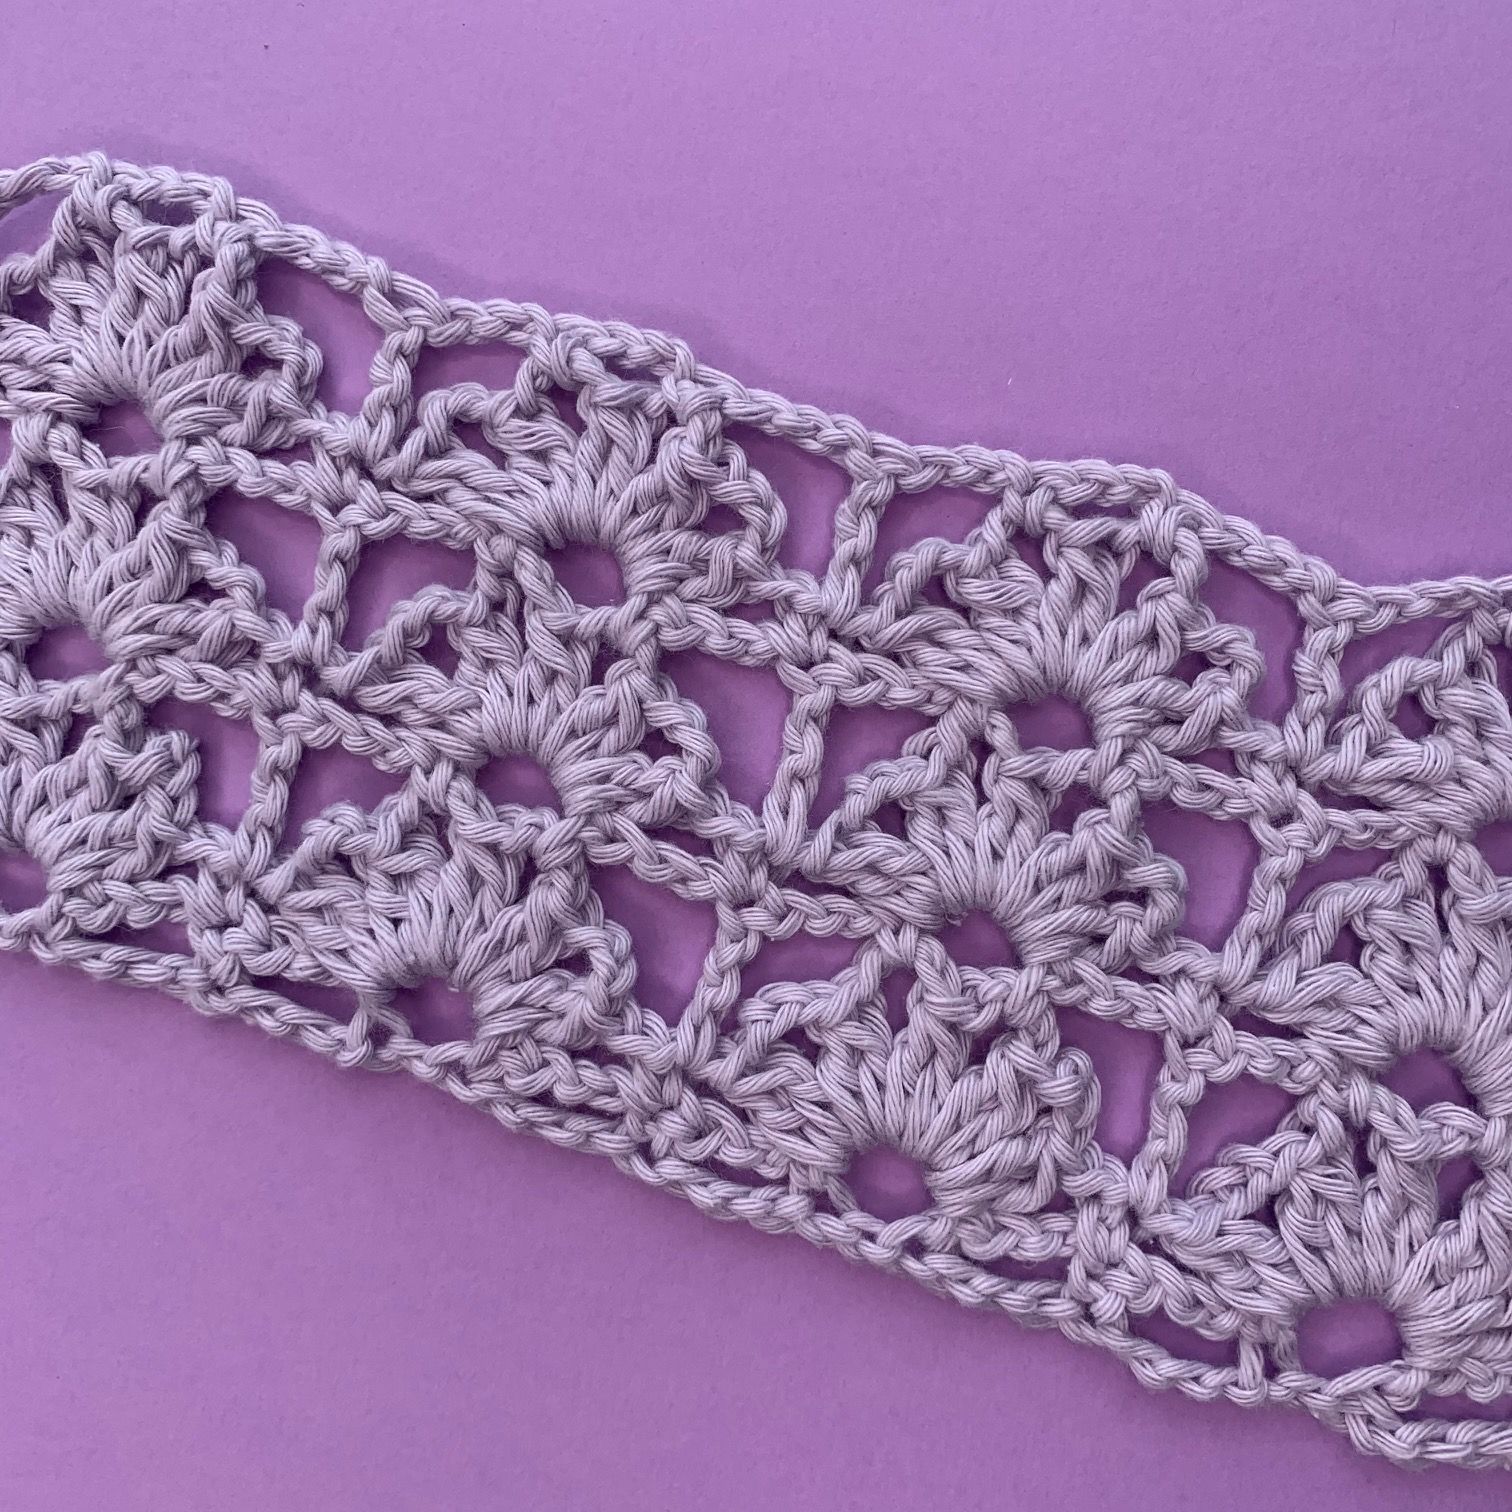 Lace Crochet Flame Stitch Pattern tutorial